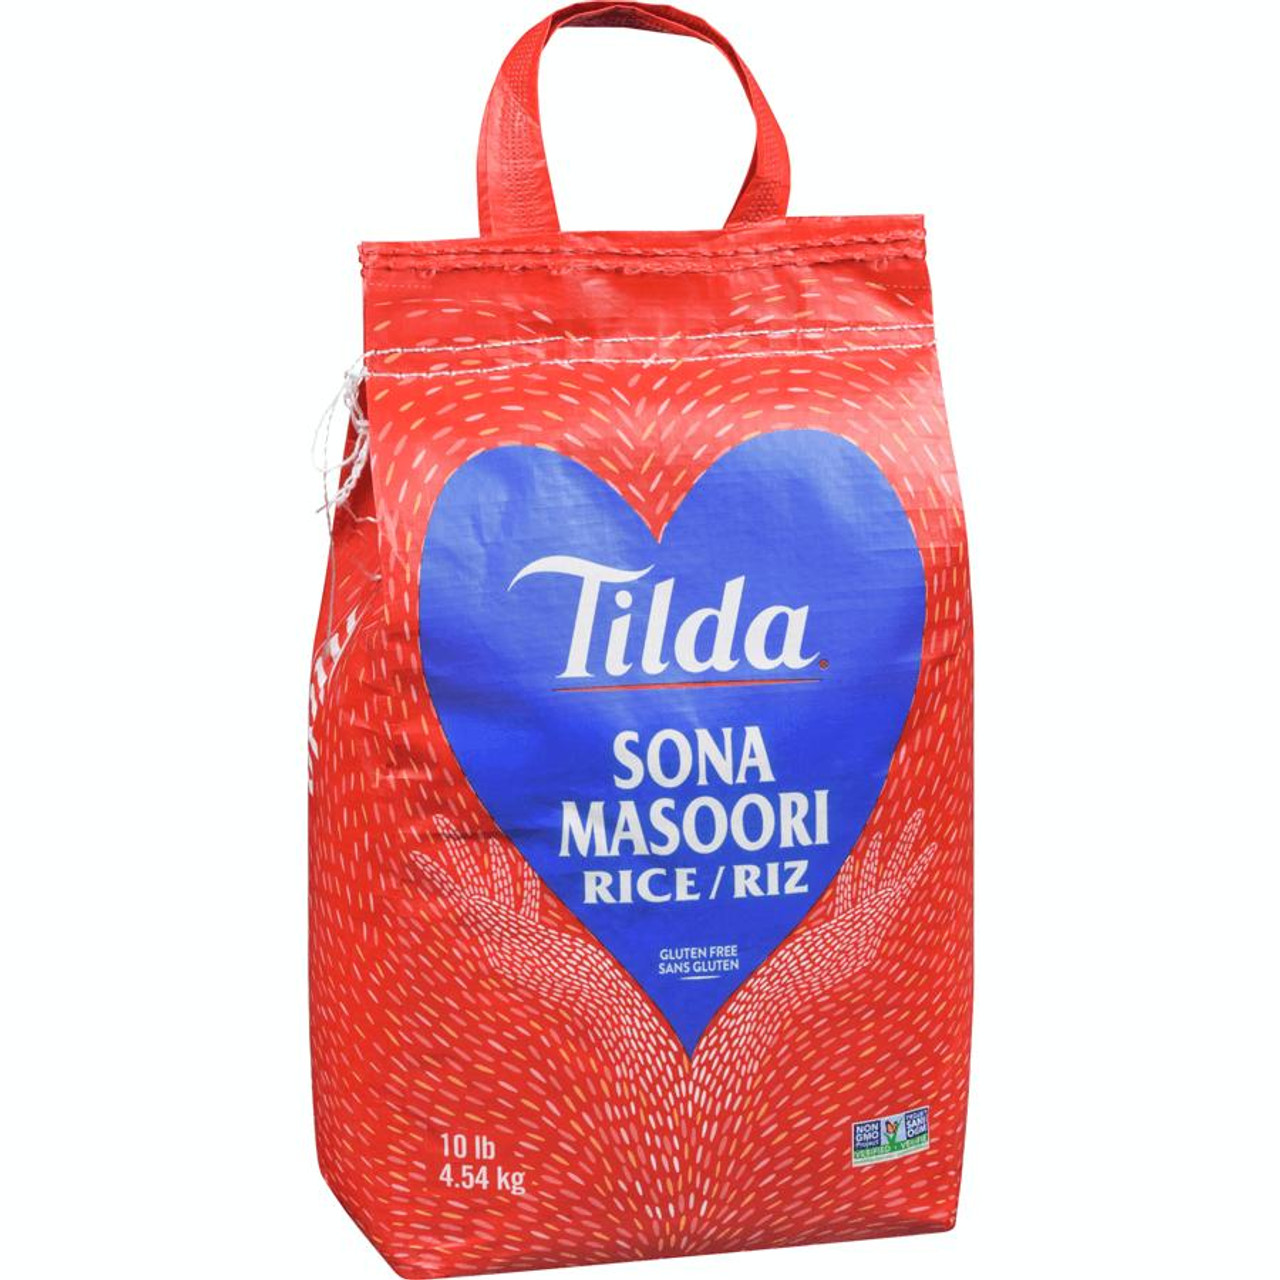 TILDA Tilda Sona Masoori Rice | Authentic Indian Grains | 10lb/4.54kgs Bag 